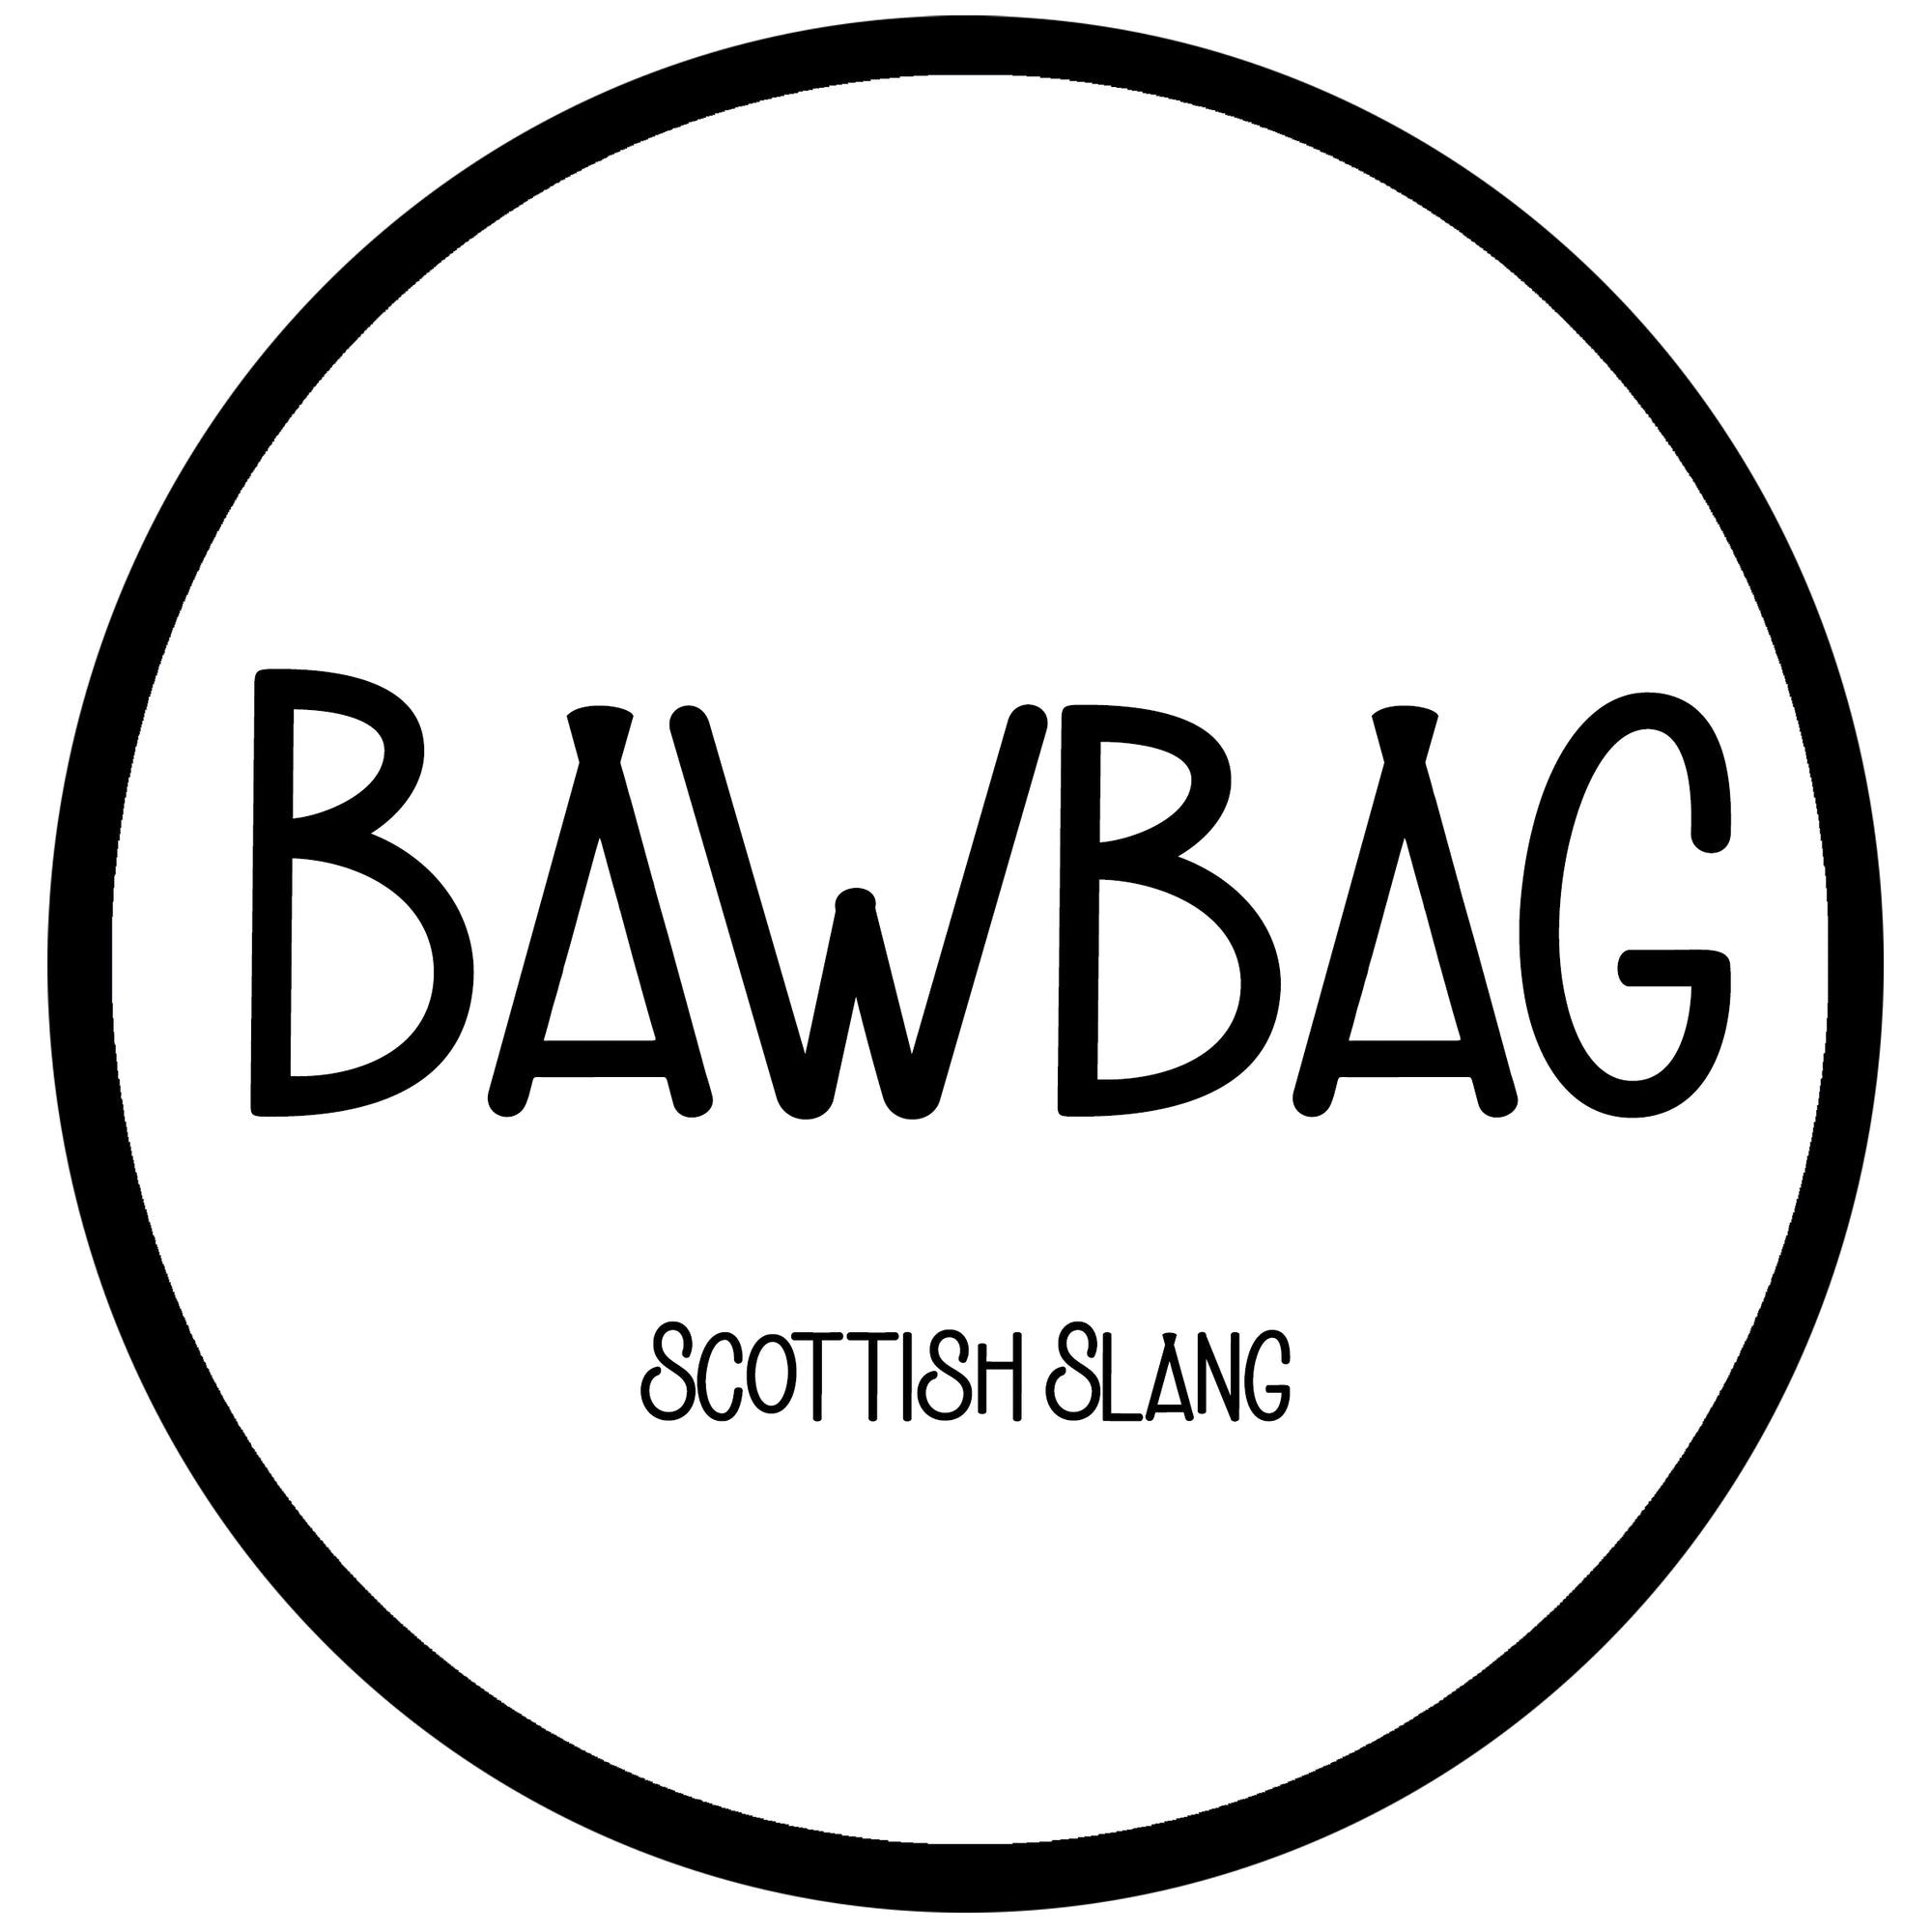 Bawbag - Scots Slang